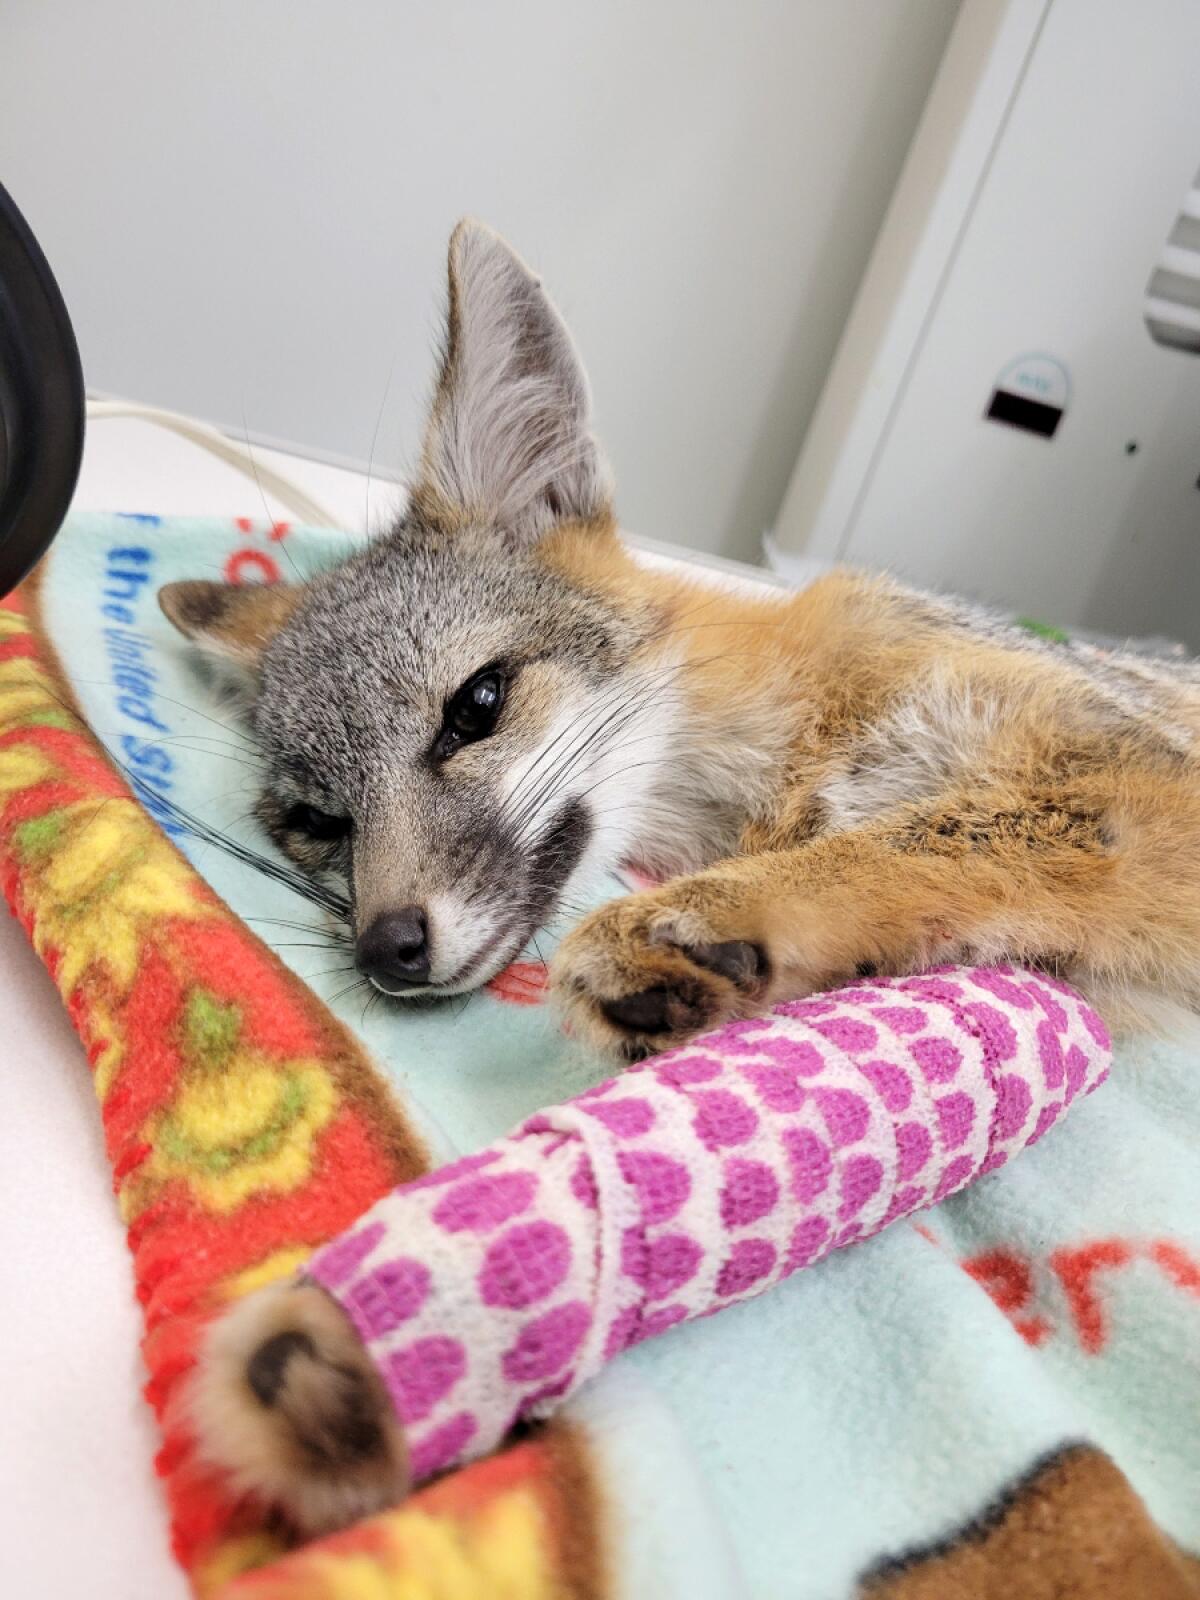 A fox with its leg bandaged